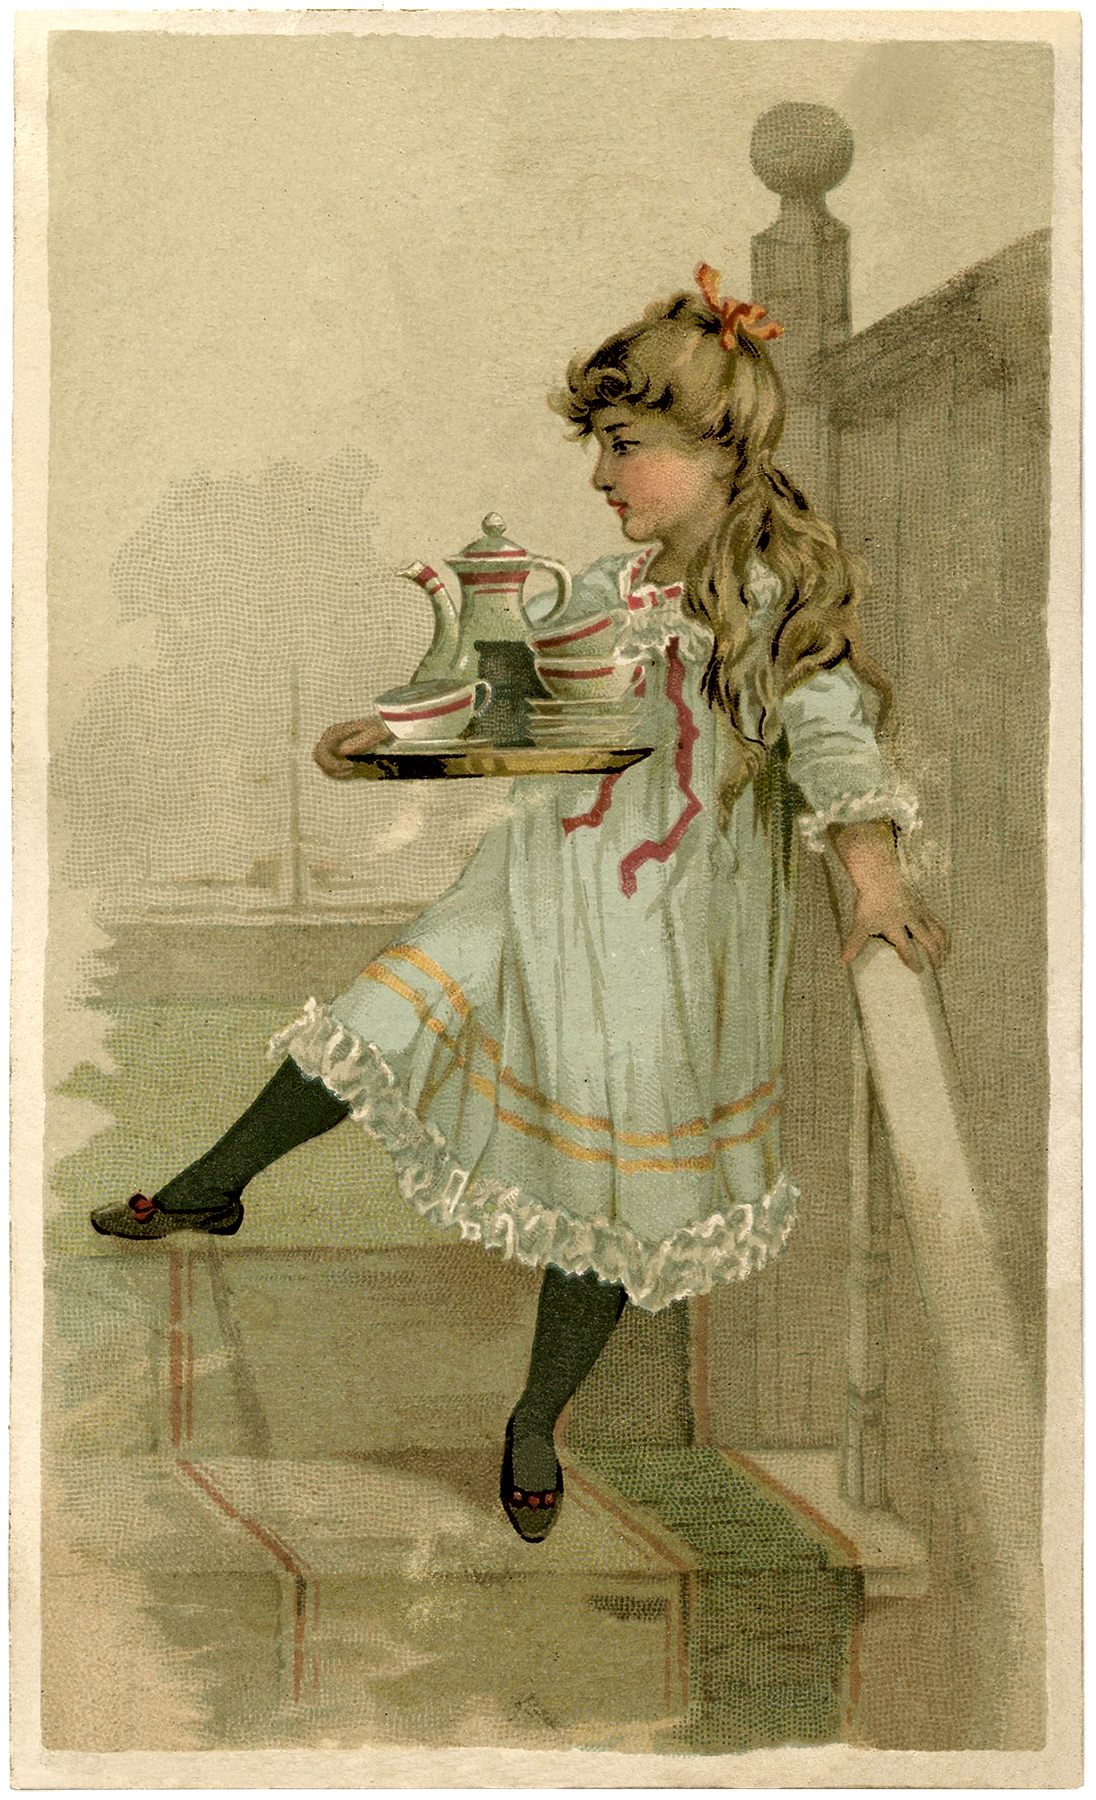 https://thegraphicsfairy.com/wp-content/uploads/2021/01/Vintage-Tea-Set-Girl-GraphicsFairy.jpg